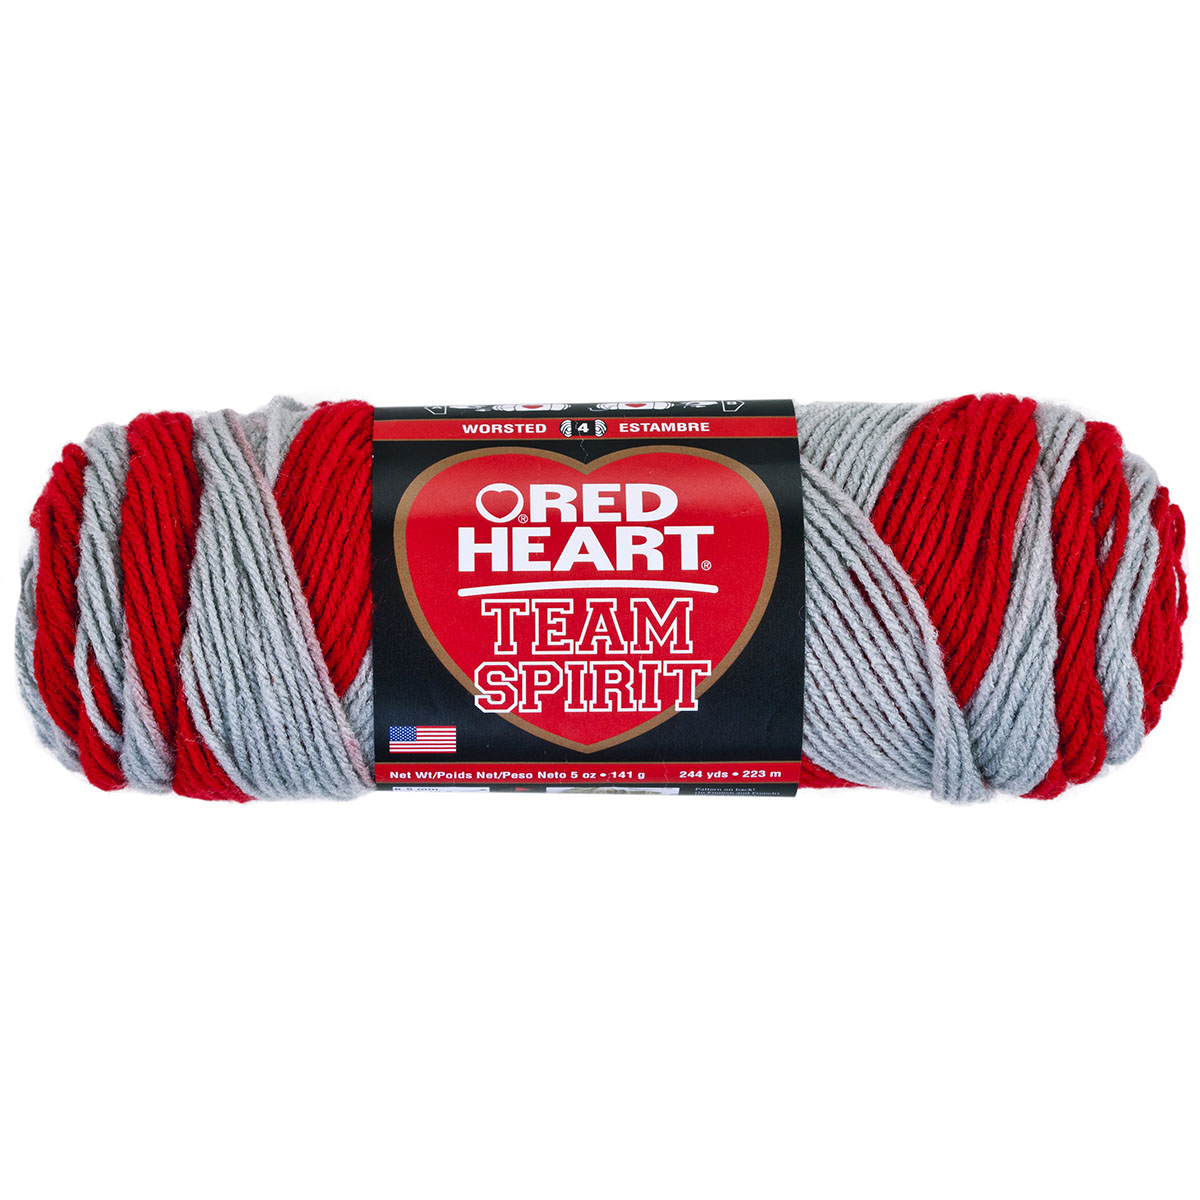 C&C Red Heart Team Spirit Yarn 5oz Red/Grey - image 1 of 2